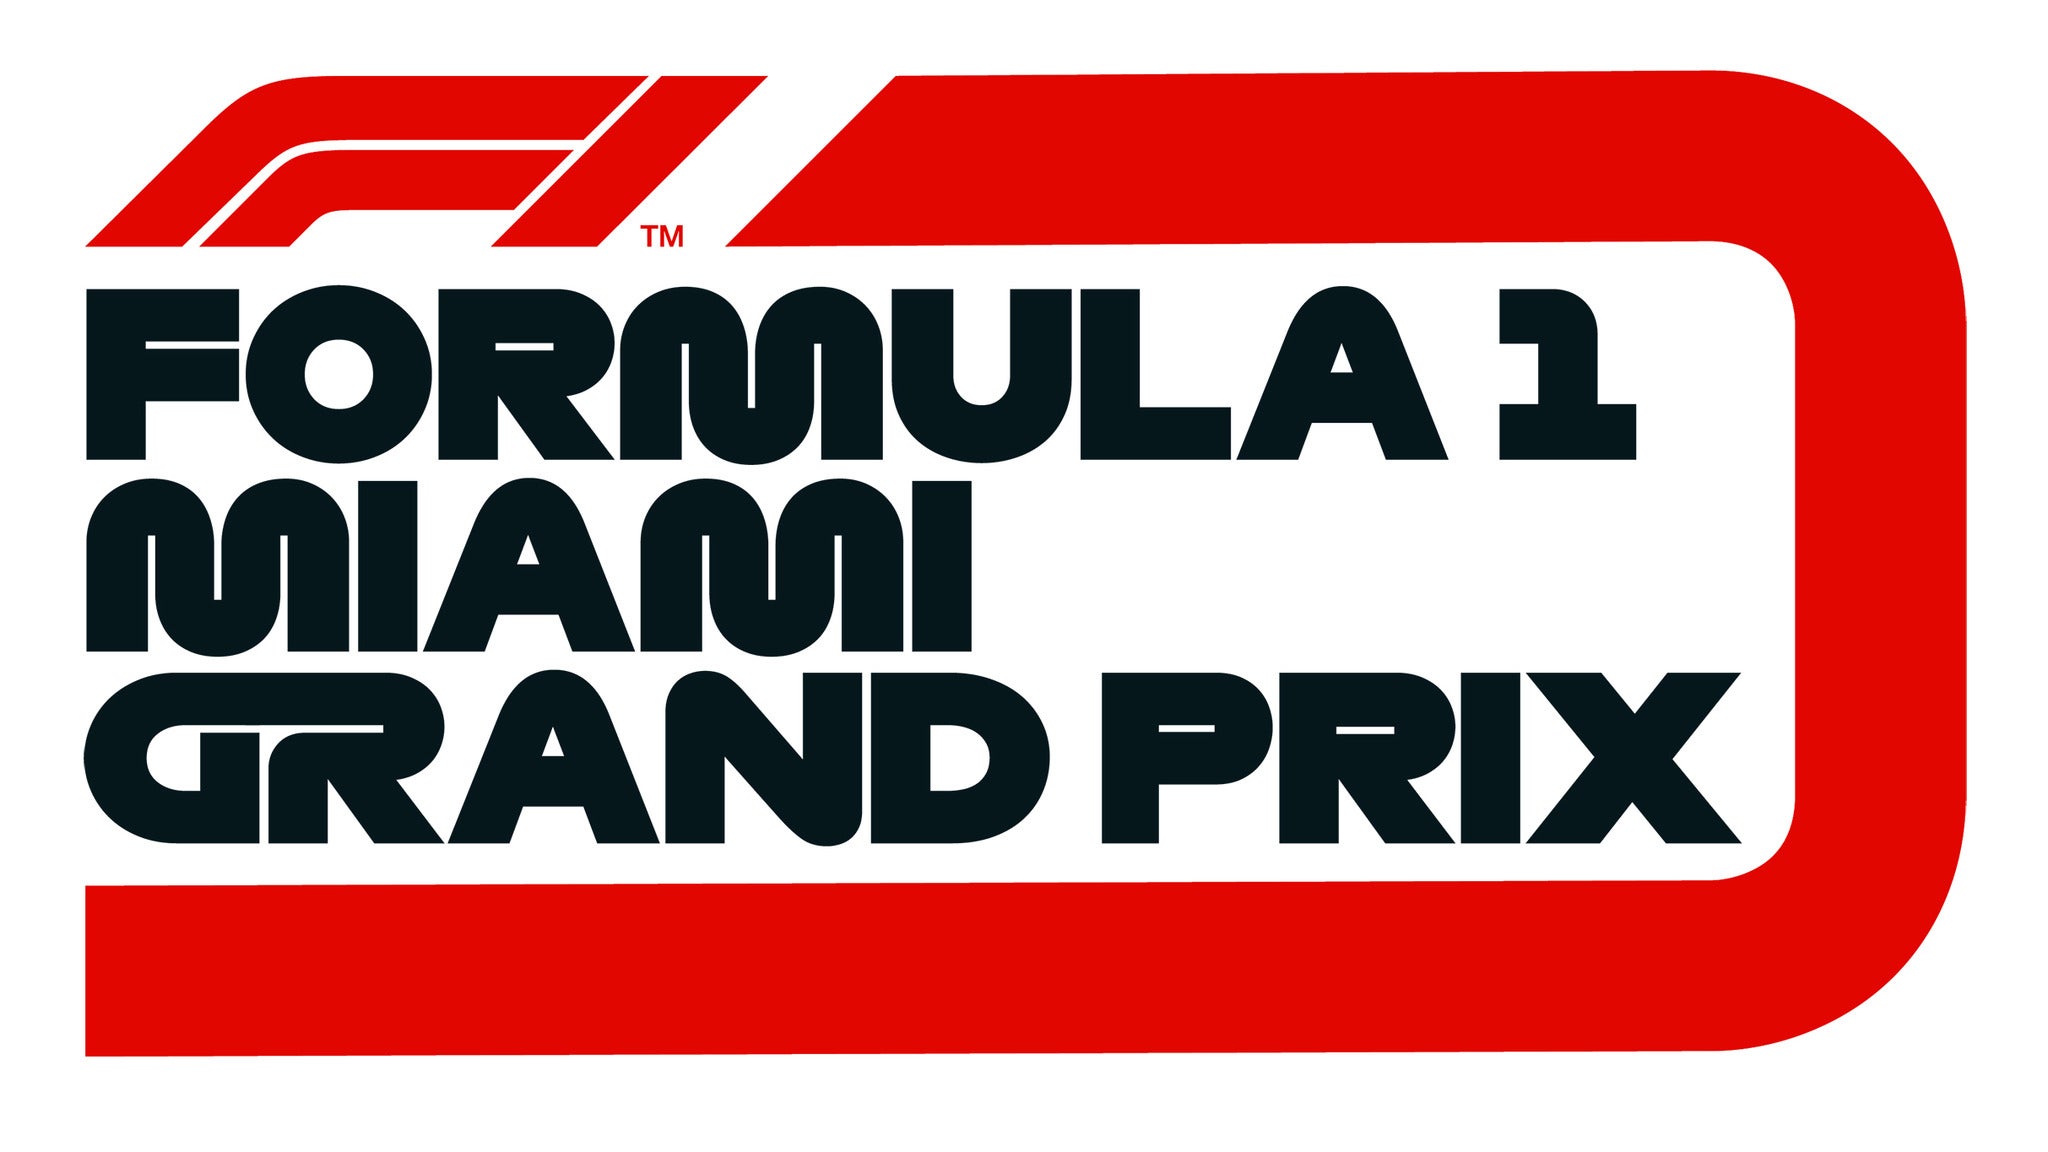 Formula 1 Miami Grand Prix - Beach Grandstands - 3 Day Package in Miami Gardens promo photo for Exclusive presale offer code